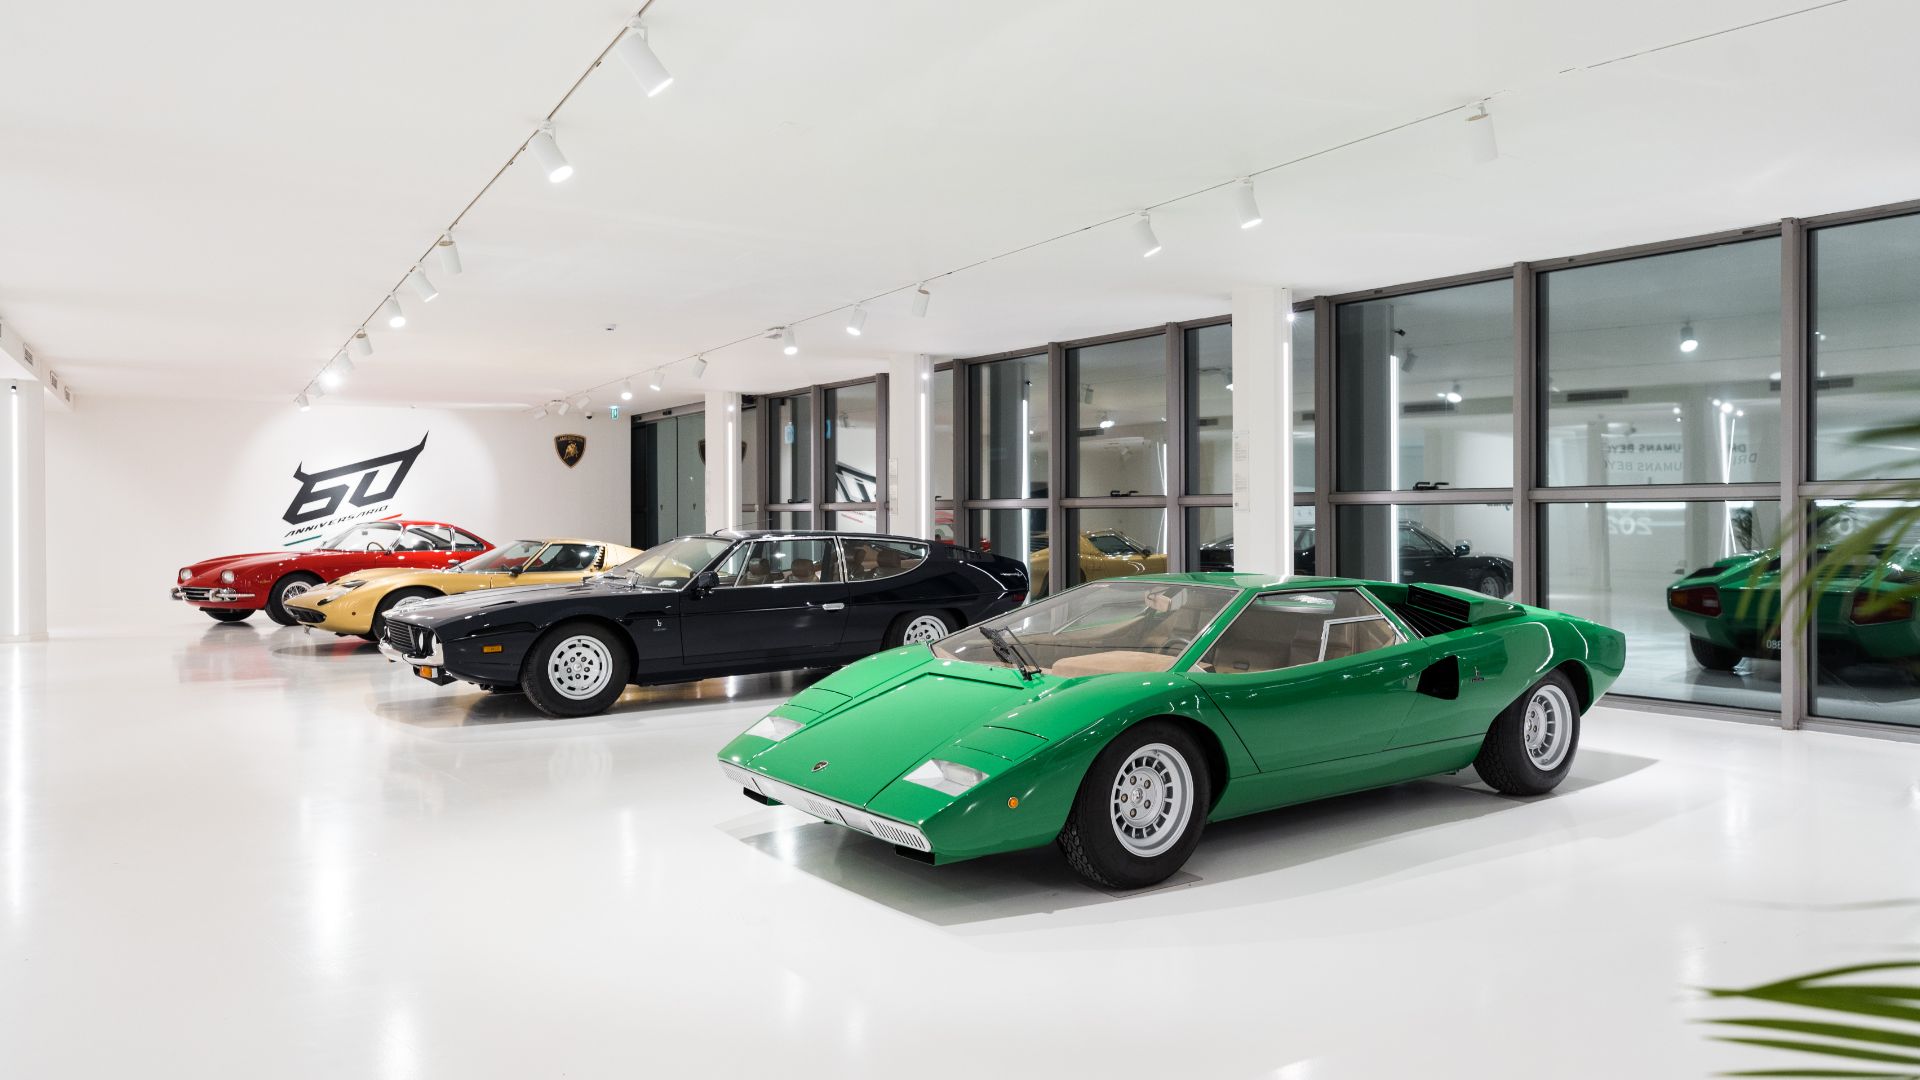 Automobili Lamborghini Museum guided tours